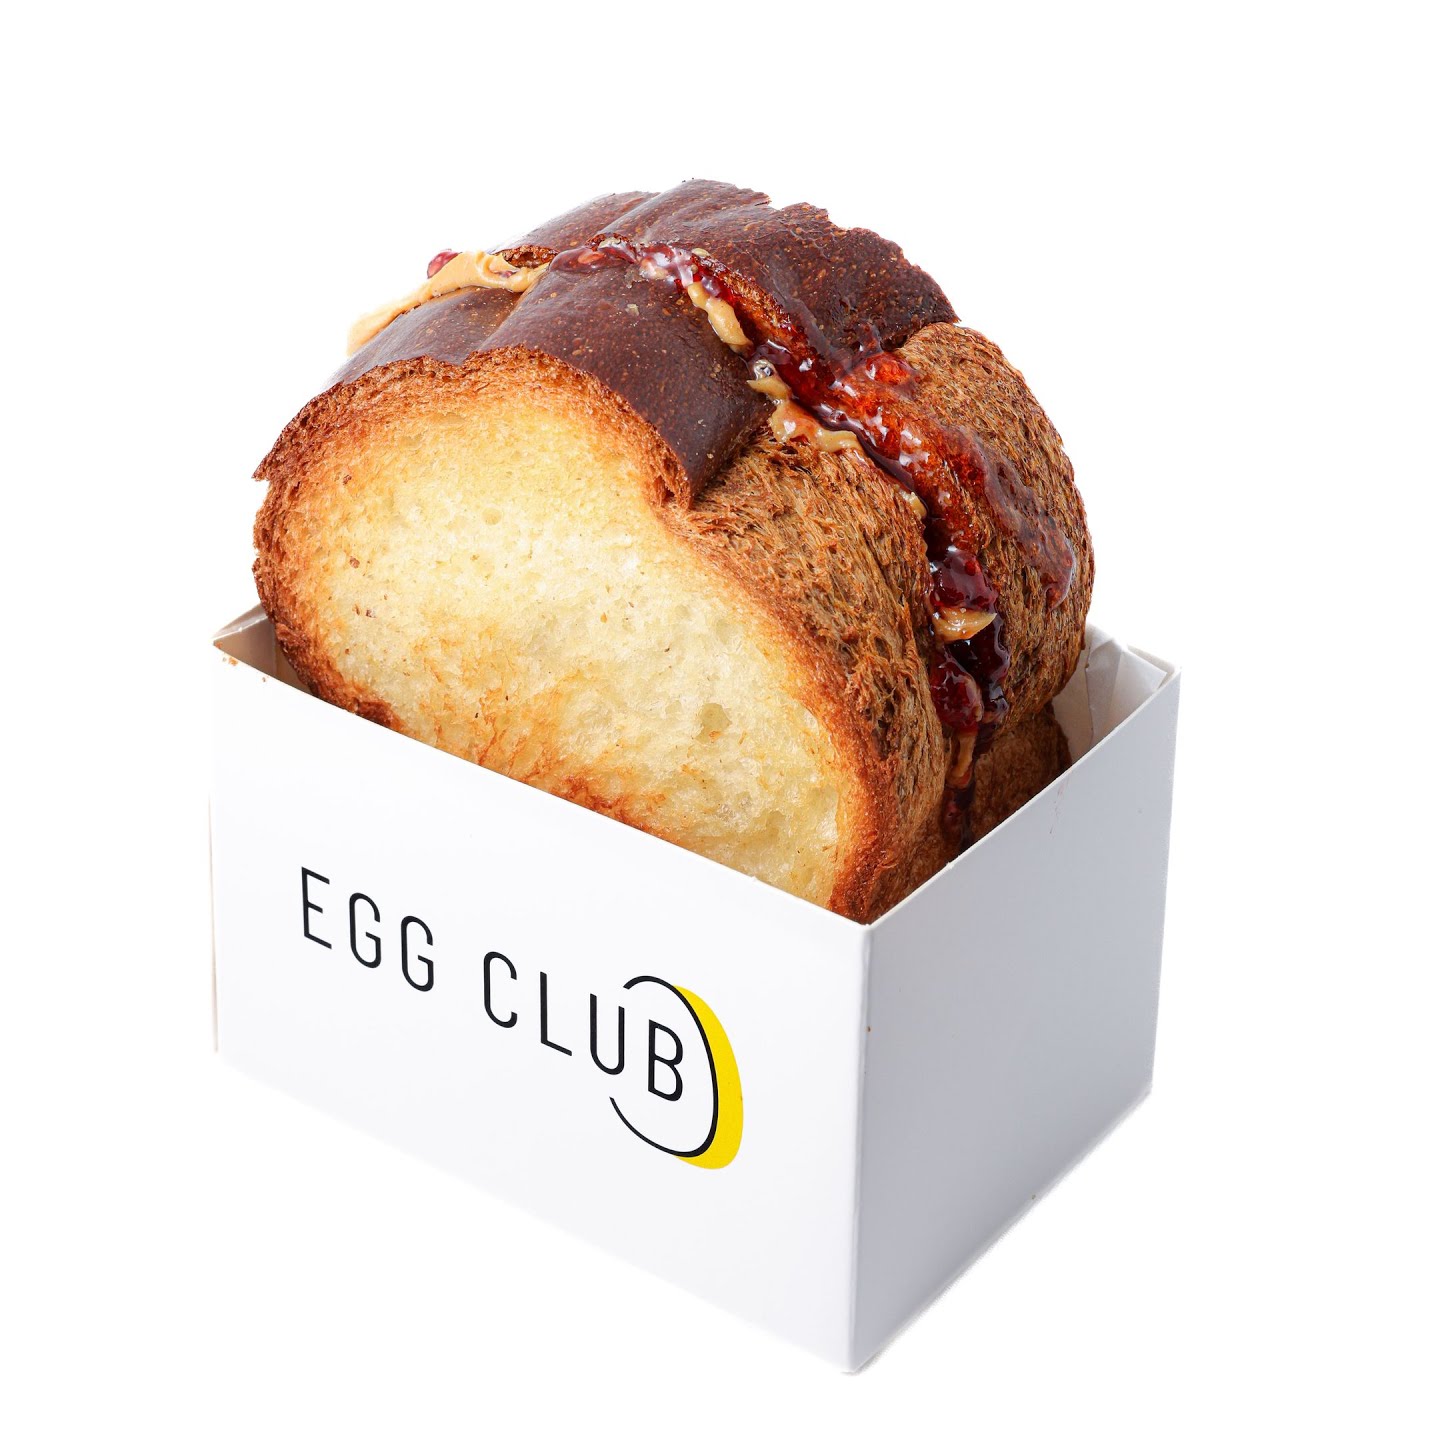 Egg Club by Google